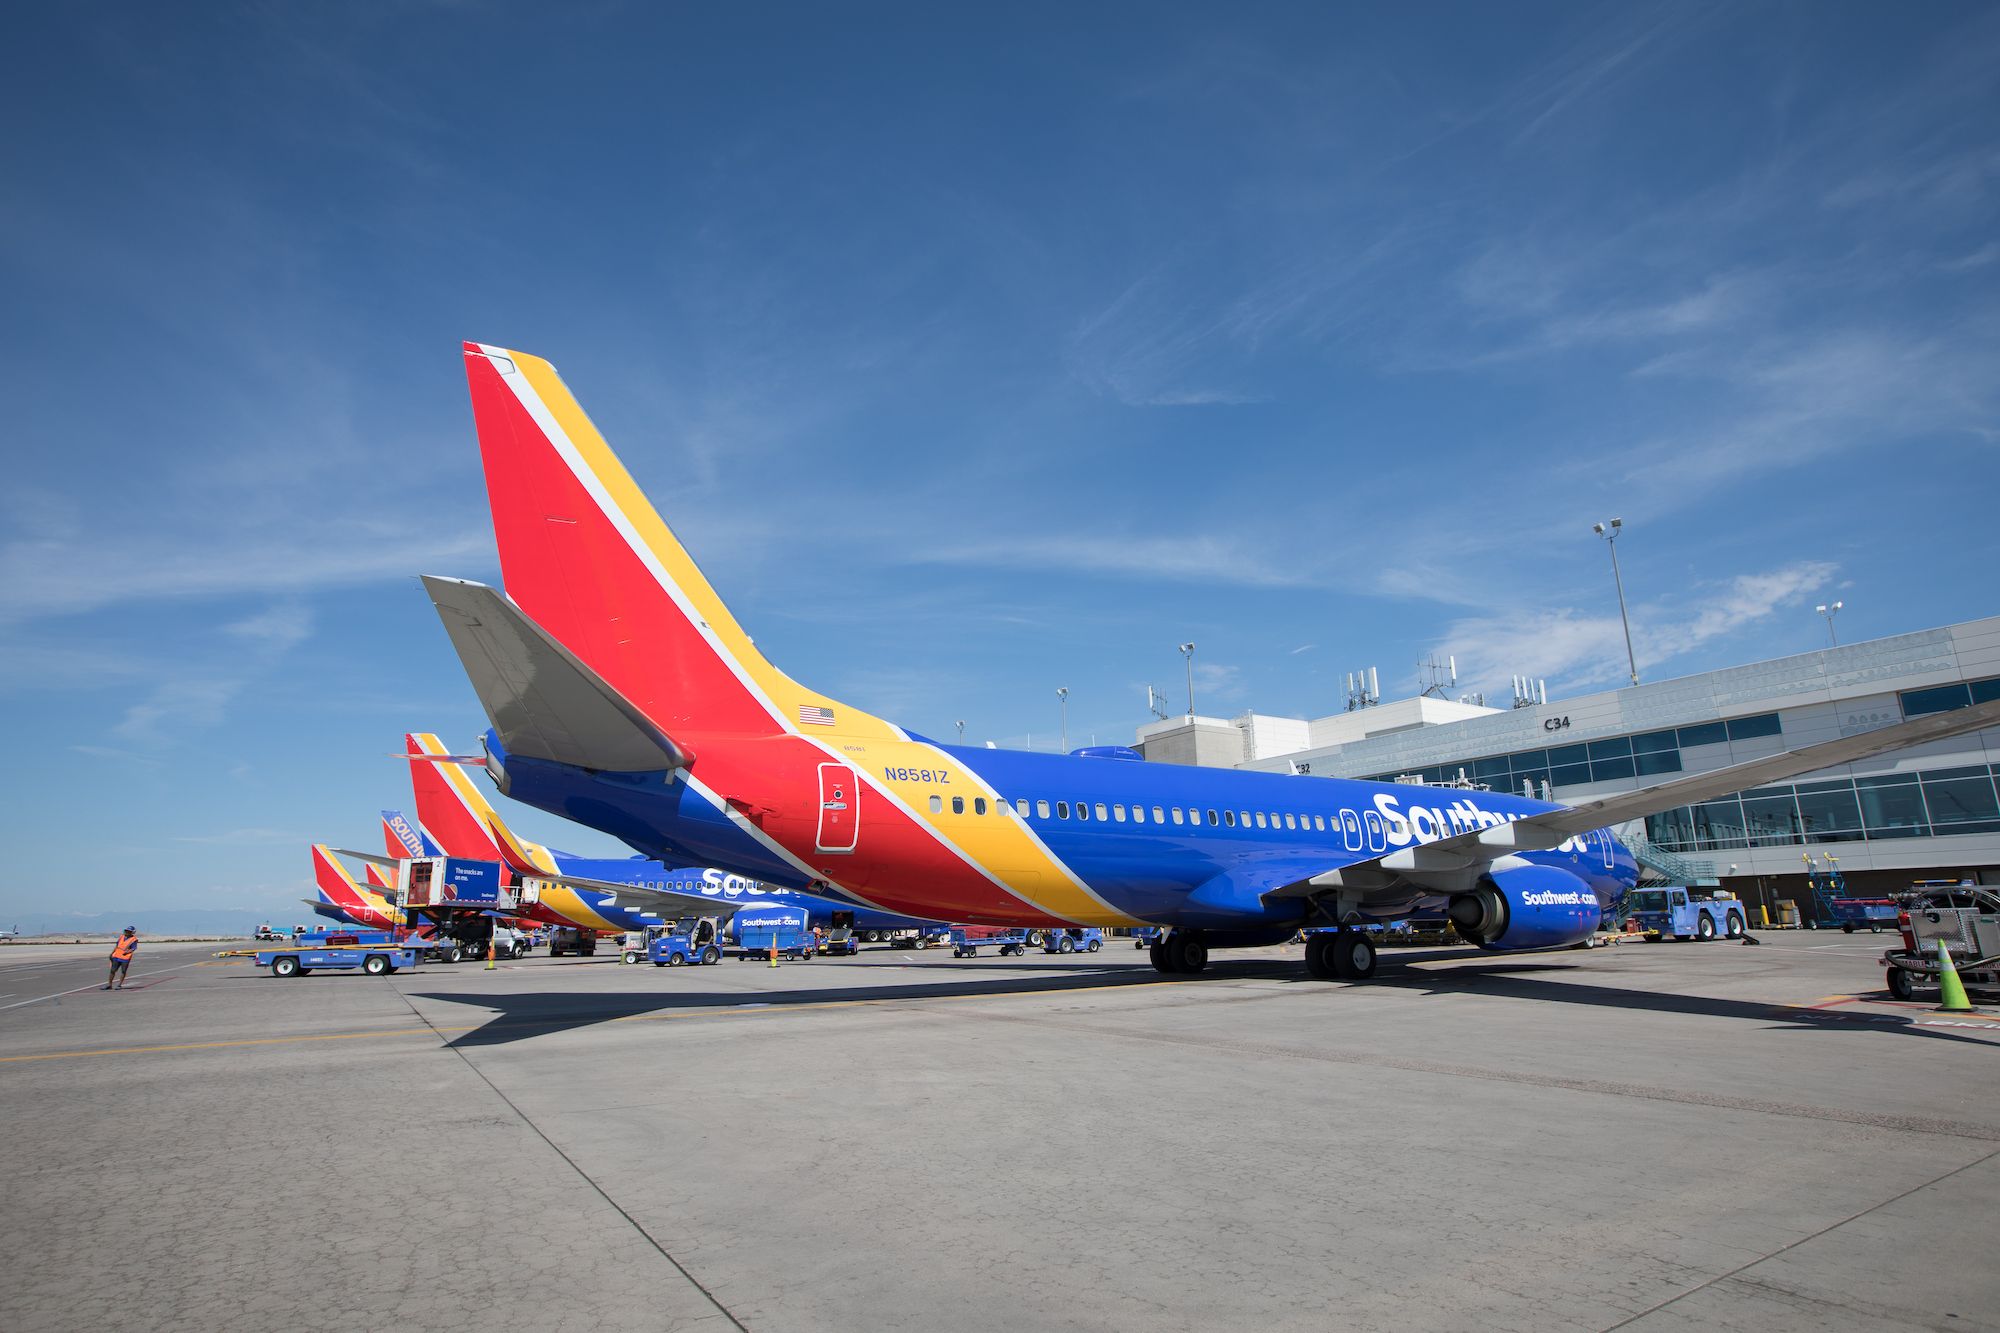 2020 - Southwest Airlines 737-800 parked at DEN gate C34-source